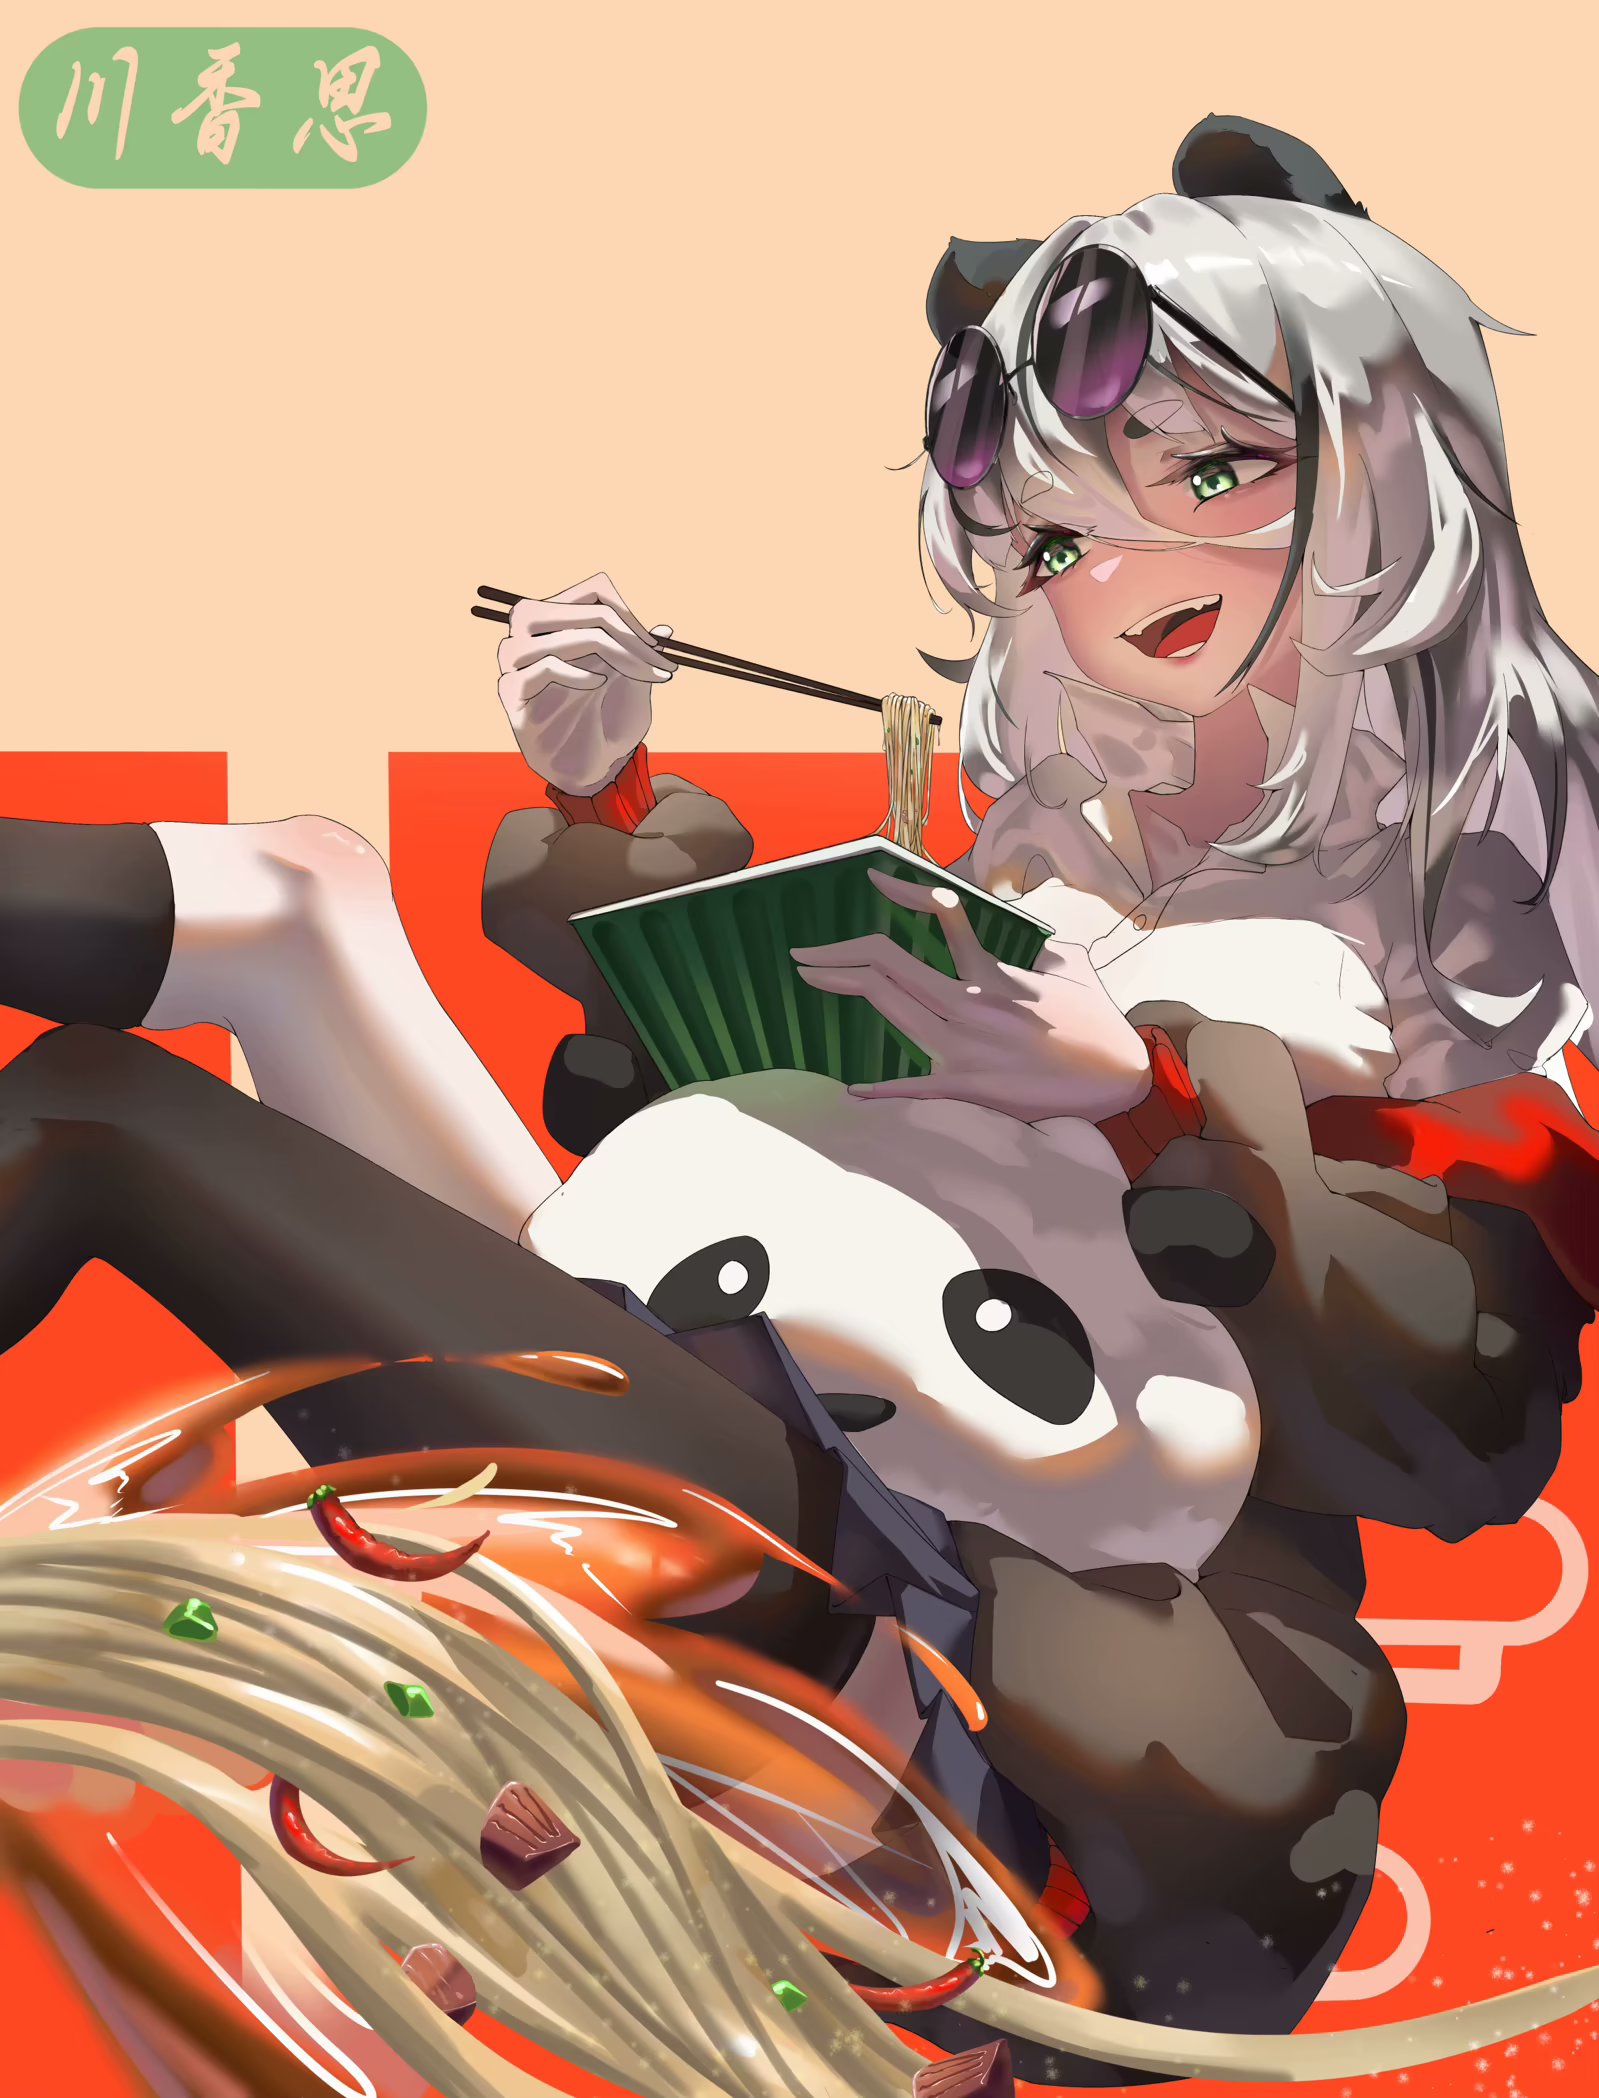 Original Characters White Hair Anime Girls Portrait Display Food Ramen